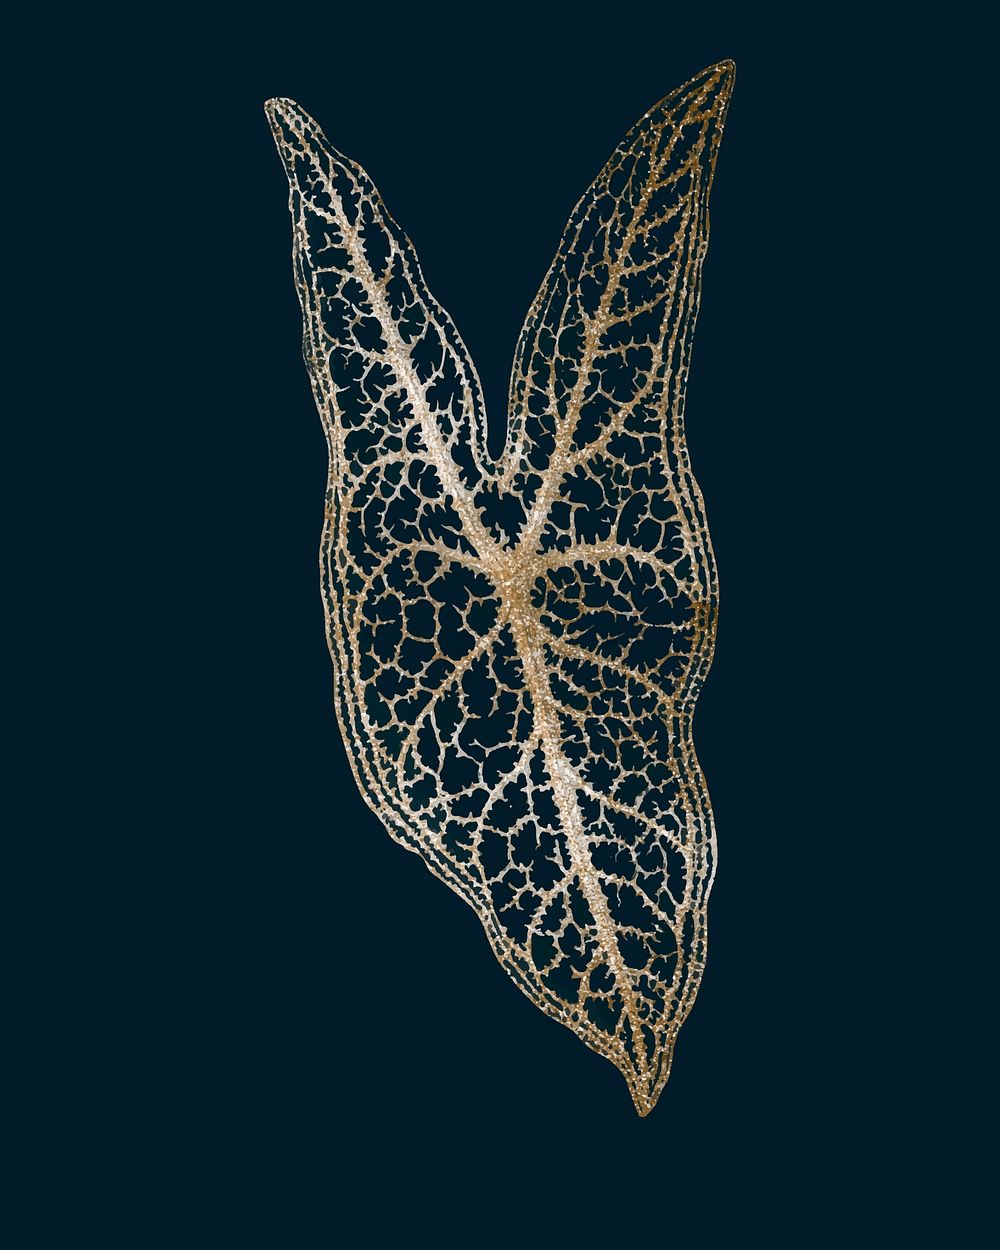 Caladium Belleymel, engraved Heart of Jesus leaf vintage vector, remix from original artwork of Benjamin Fawcett.